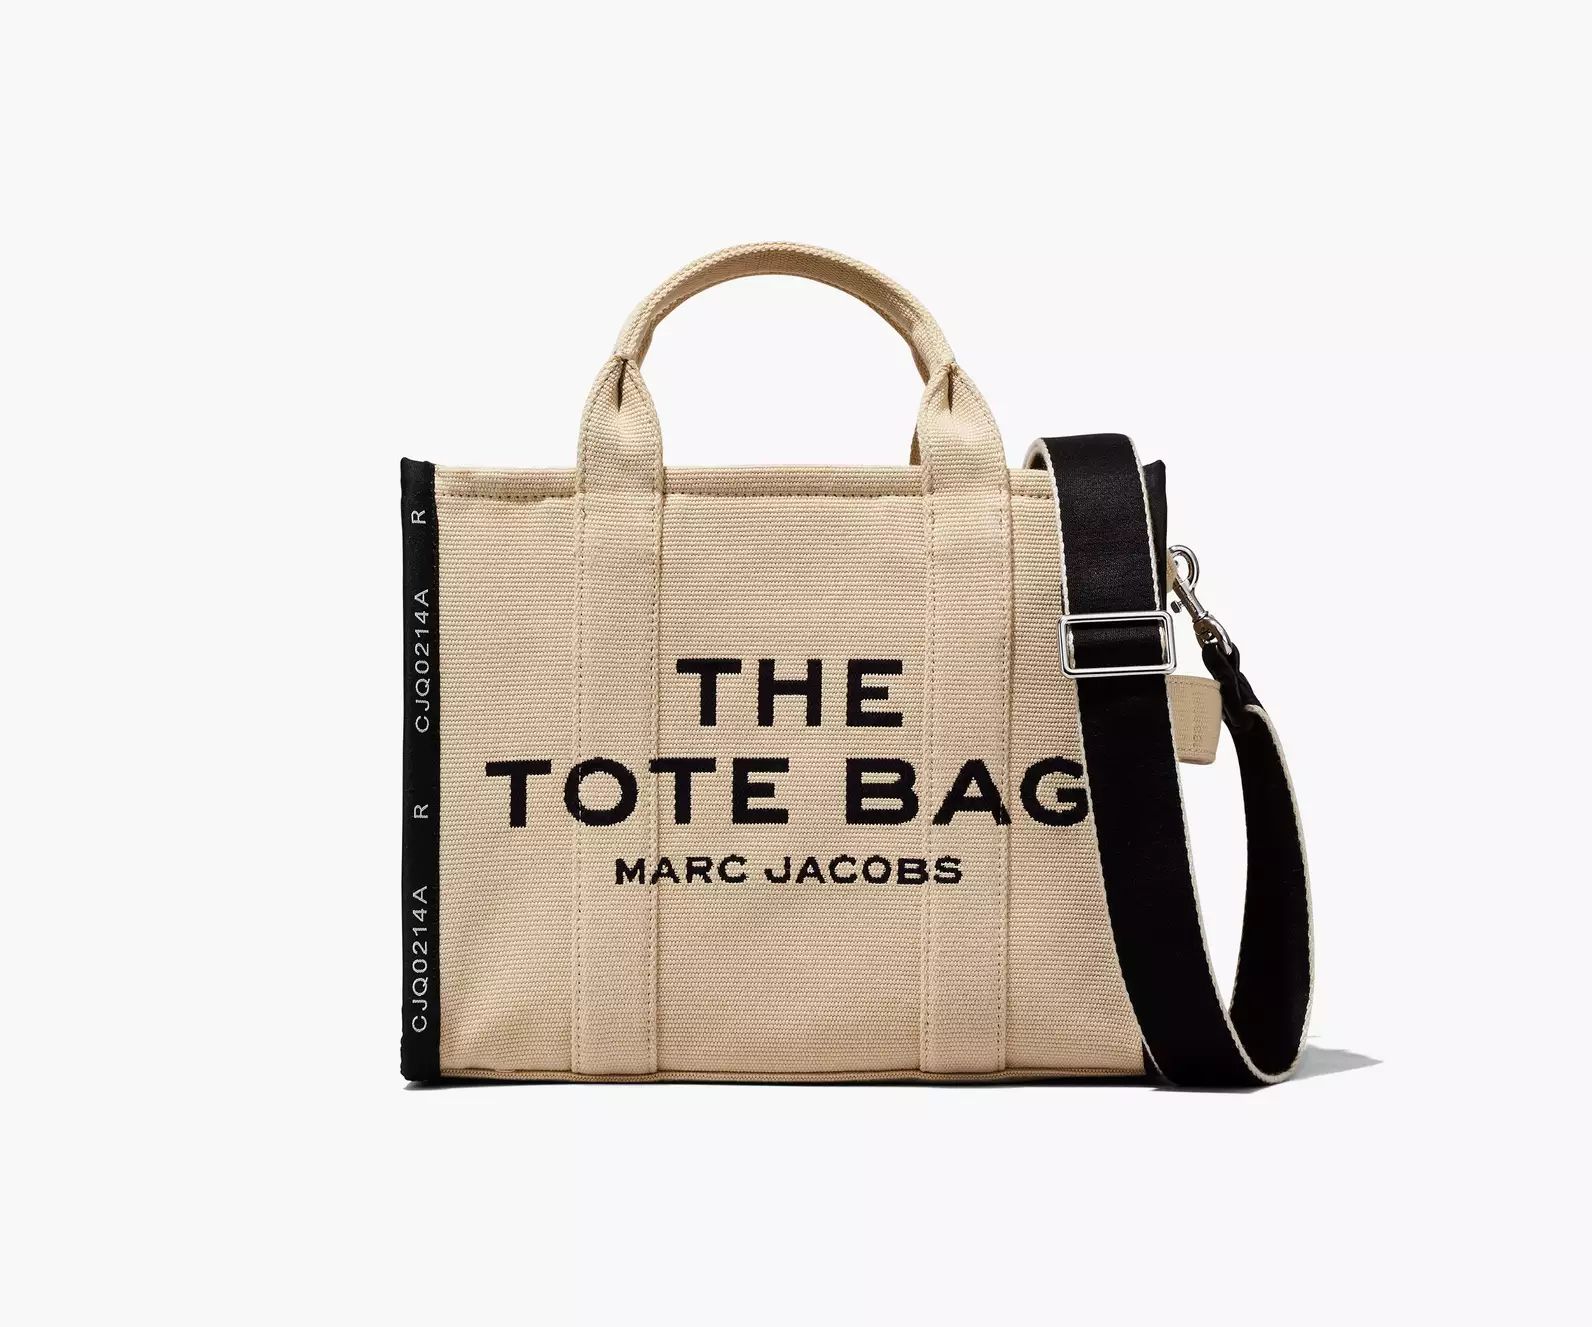 The Jacquard Medium Tote Bag | Marc Jacobs